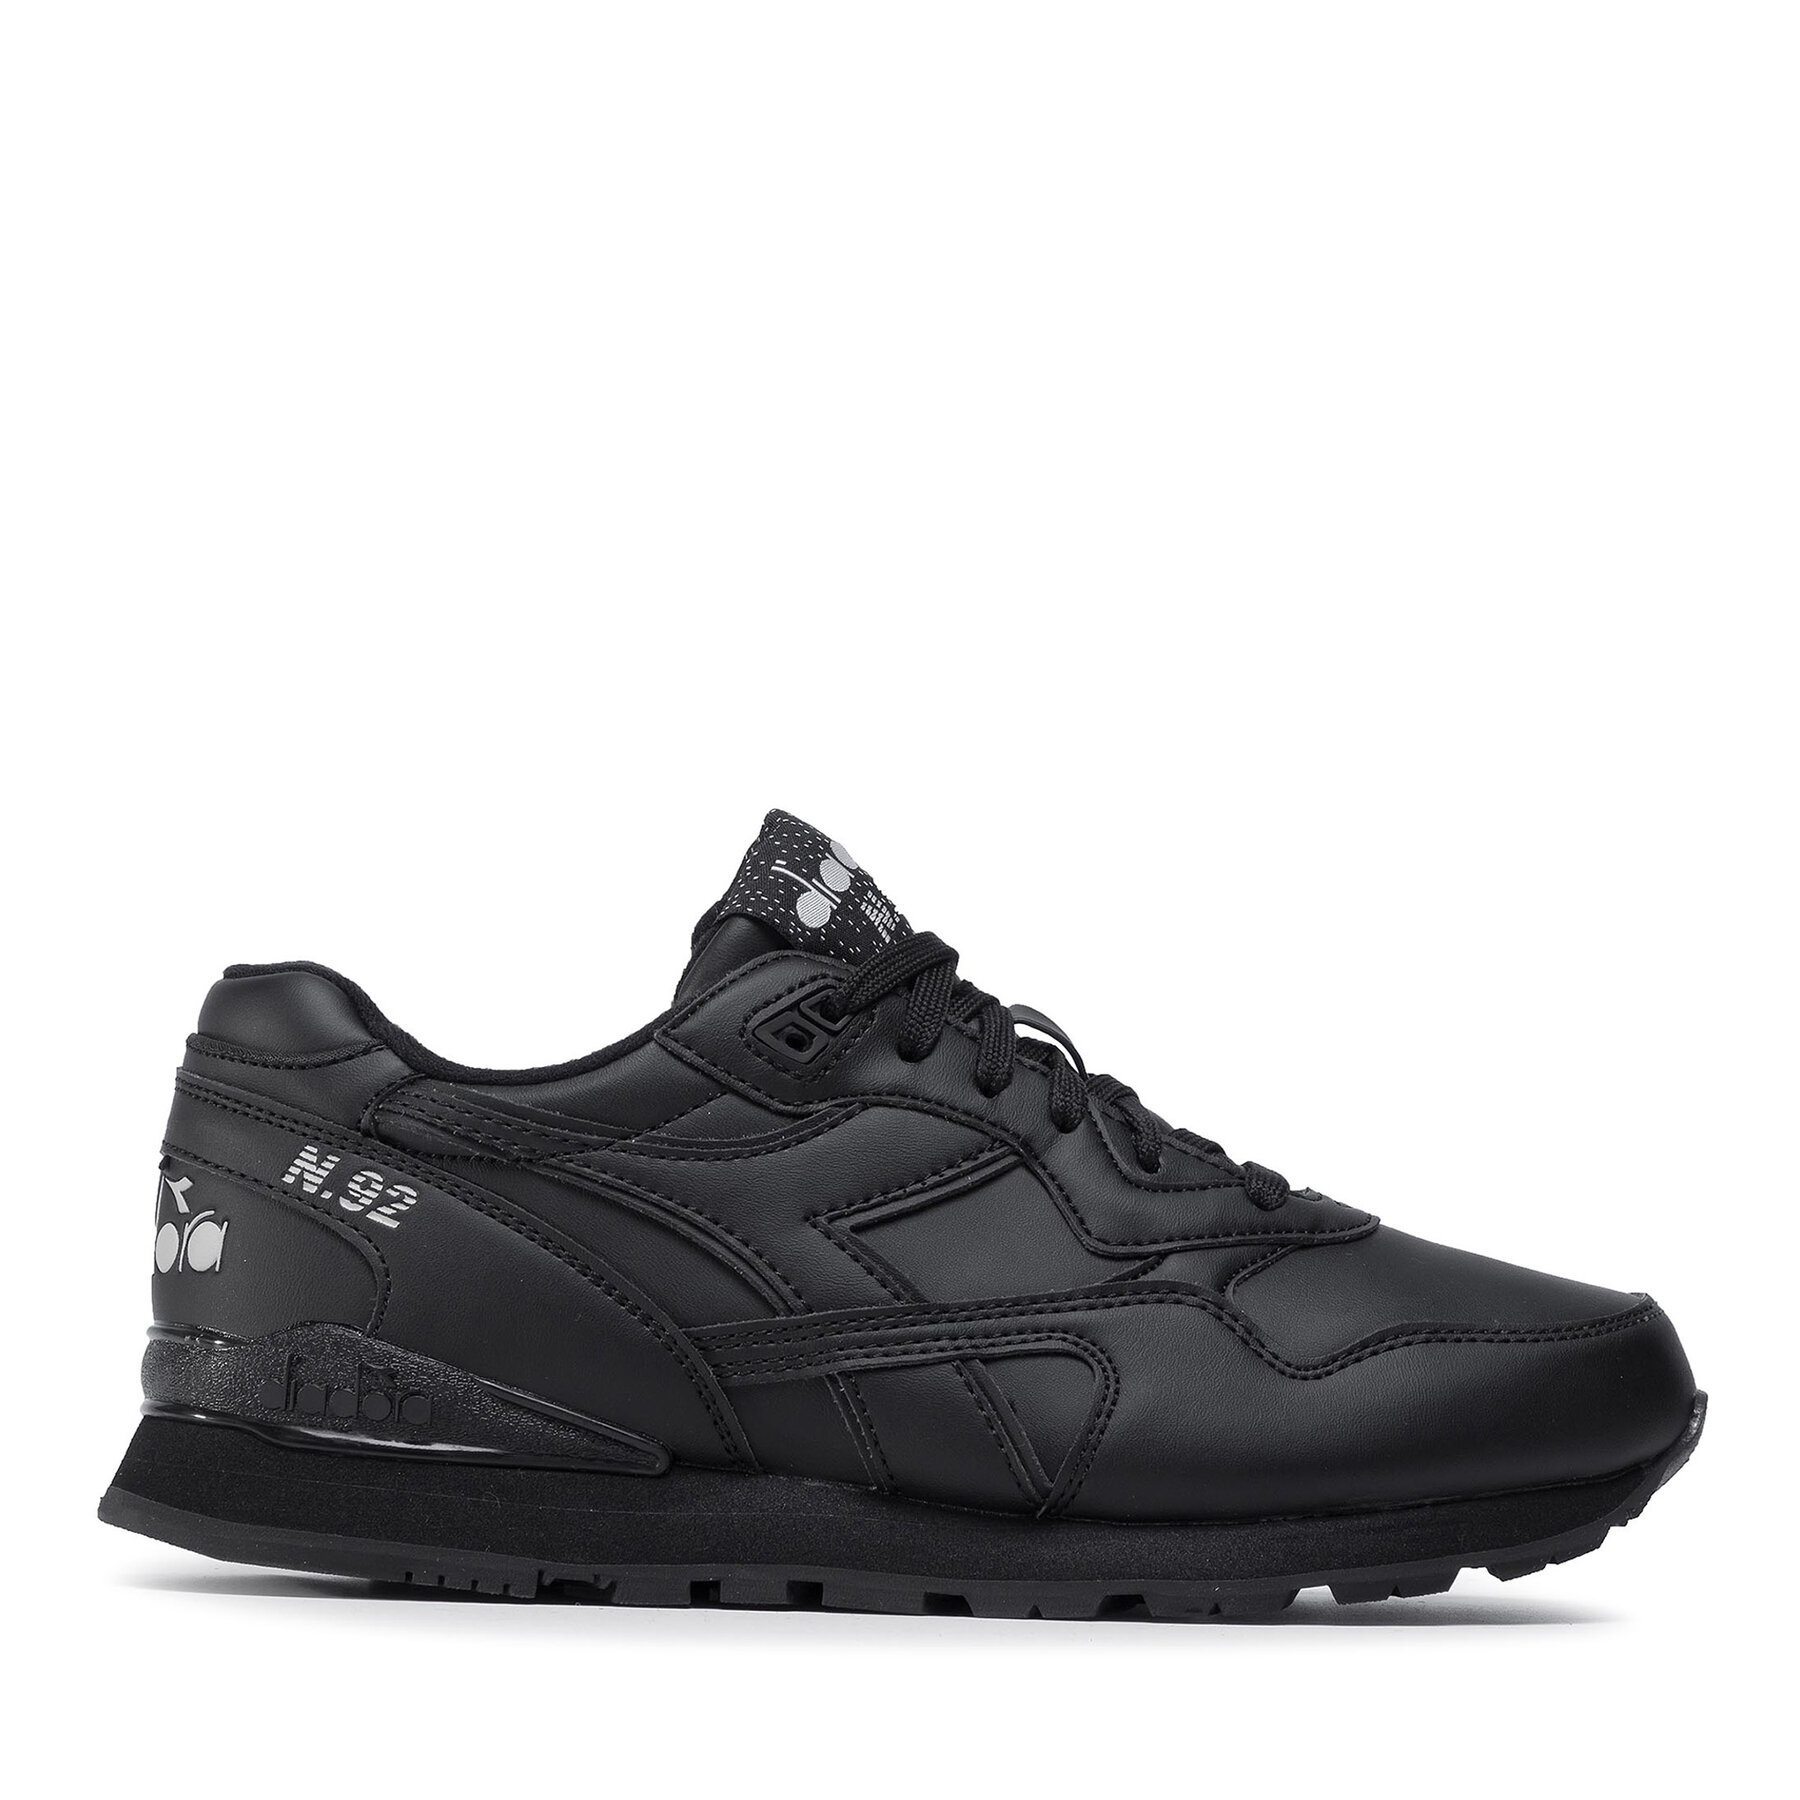 Sneakers Diadora N. 92 L 101.173744 01 C0200 Black/Black von Diadora